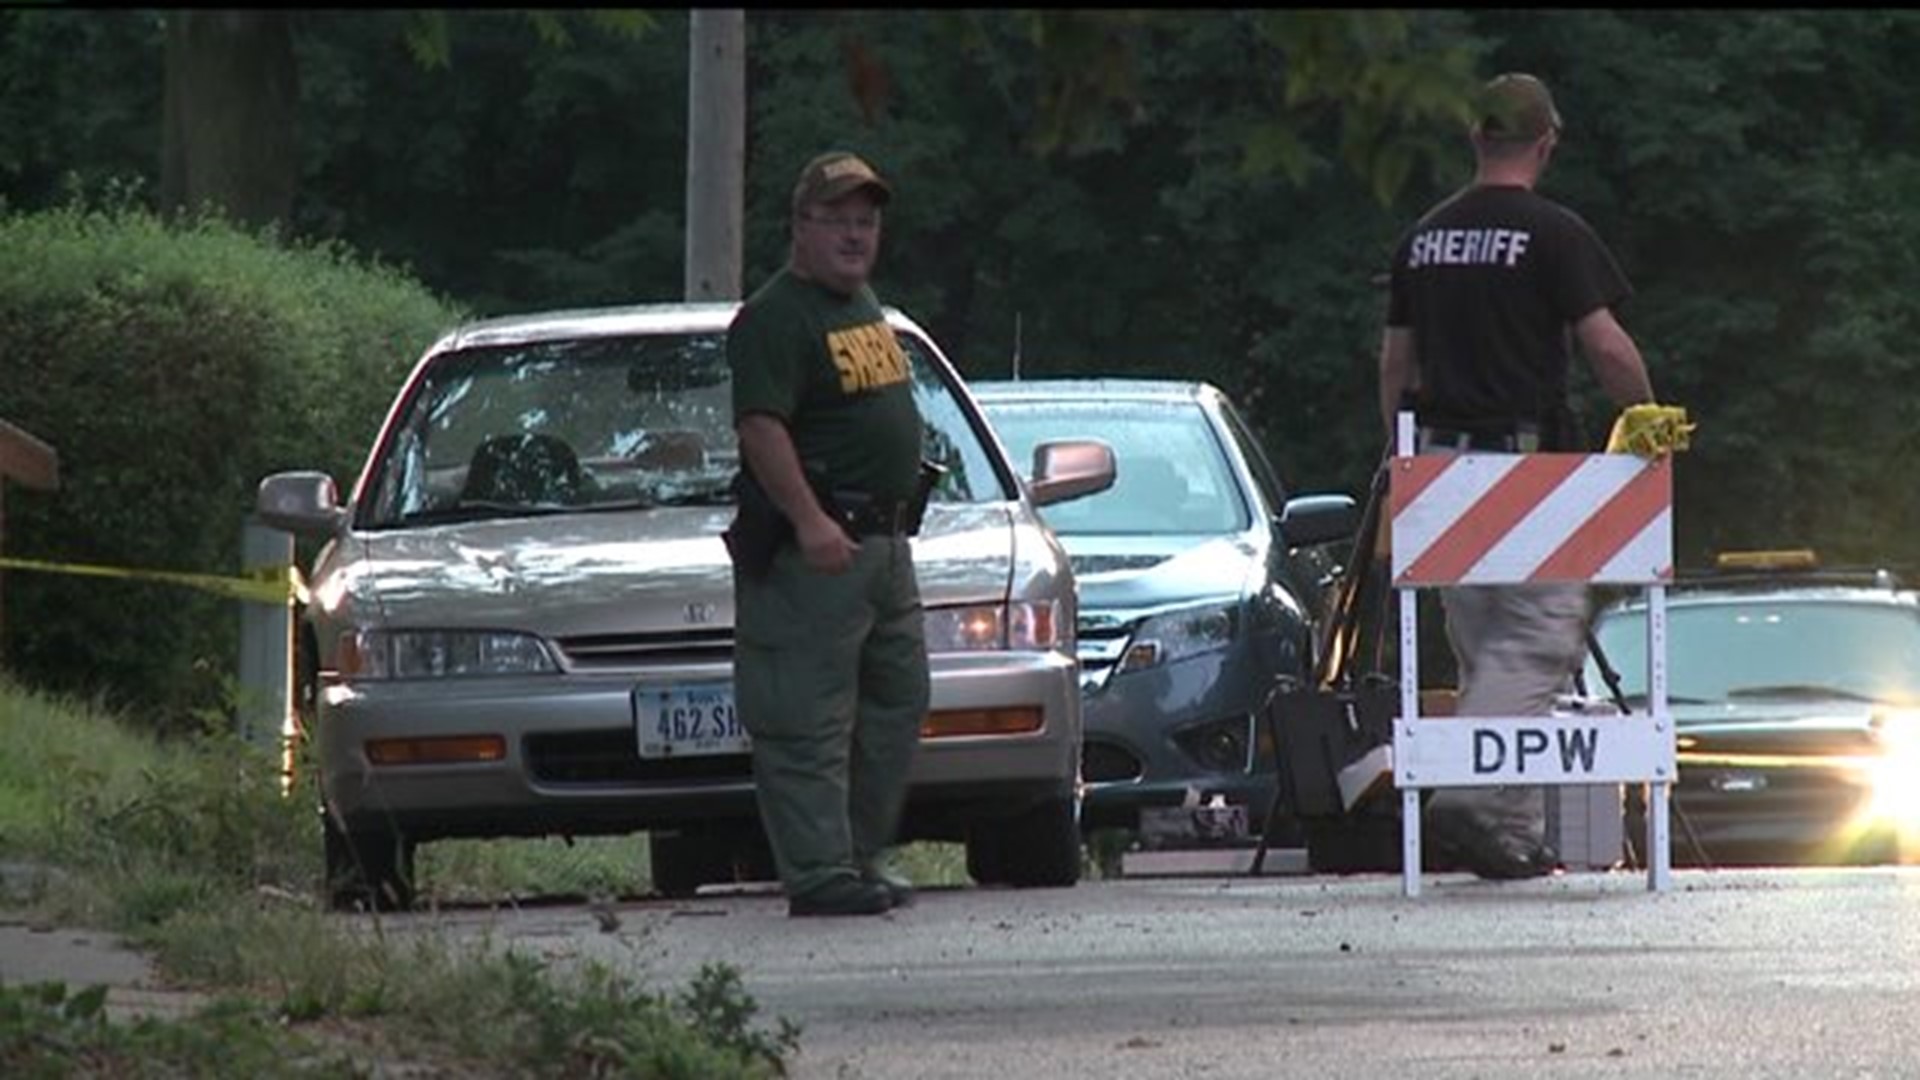 Police-involved shooting in Davenport